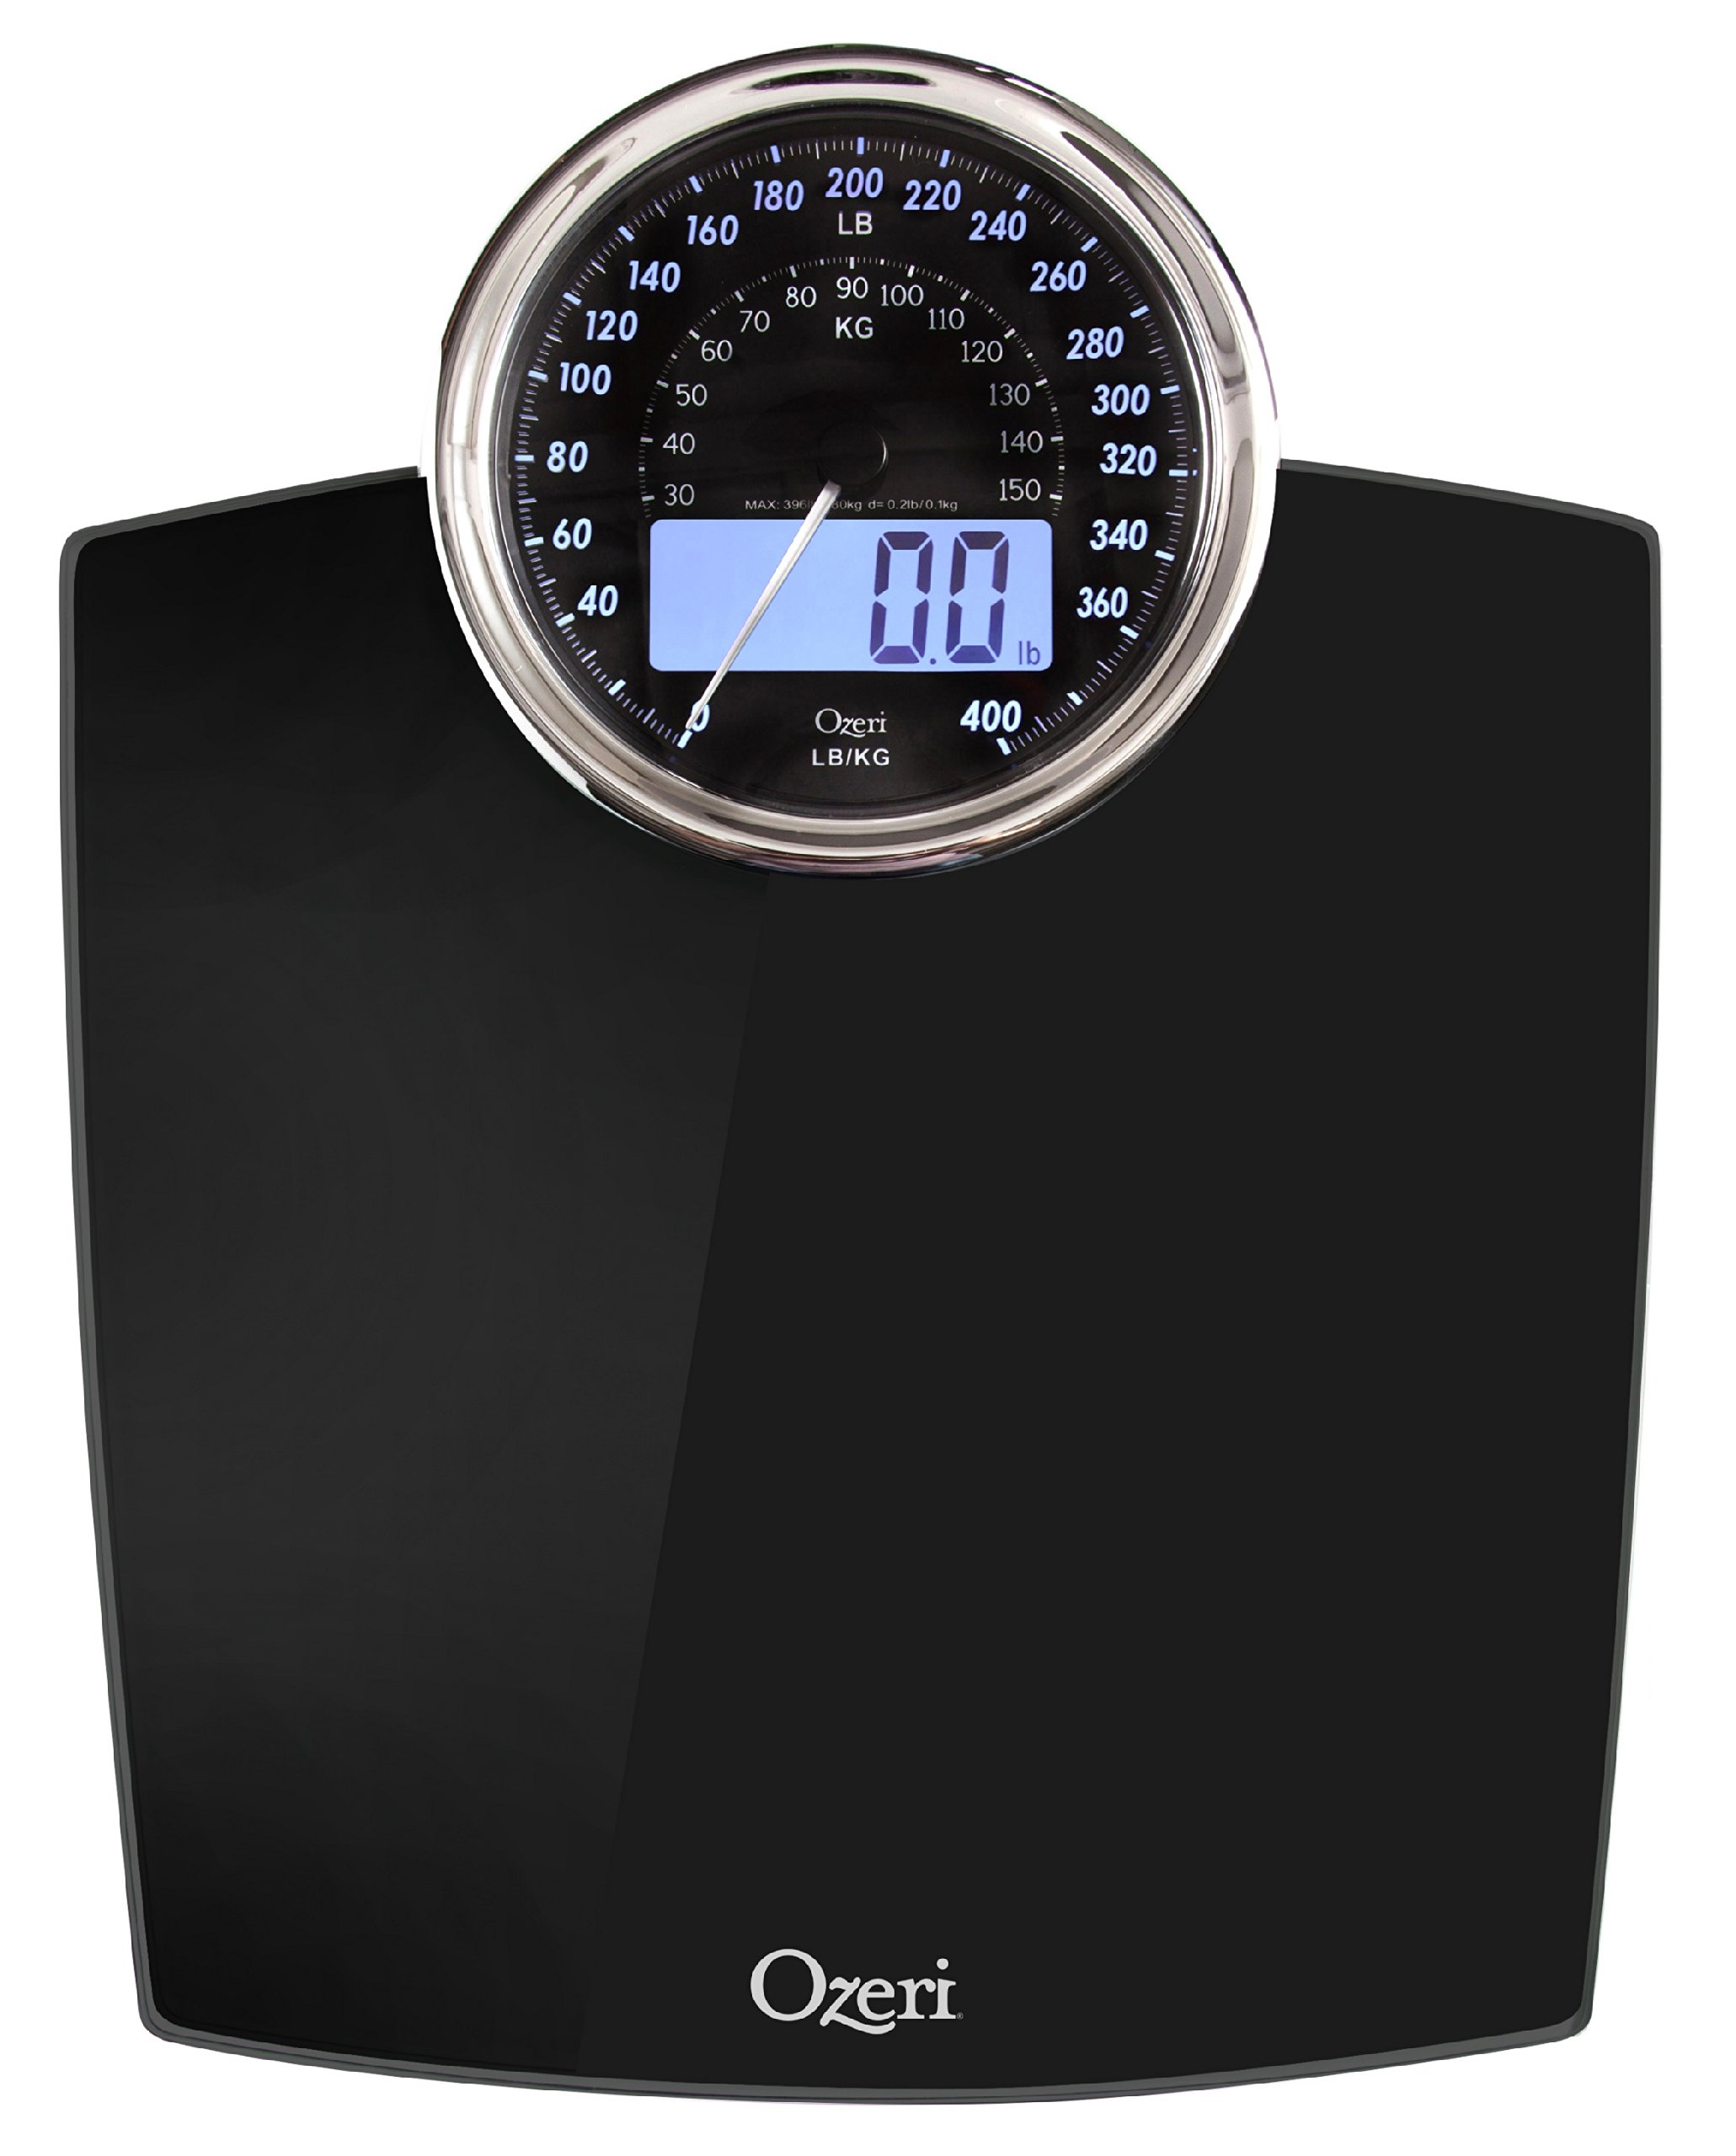 Ozeri Rev 400 lbs (180 kg) Bathroom Scale with Electro-Mechanical